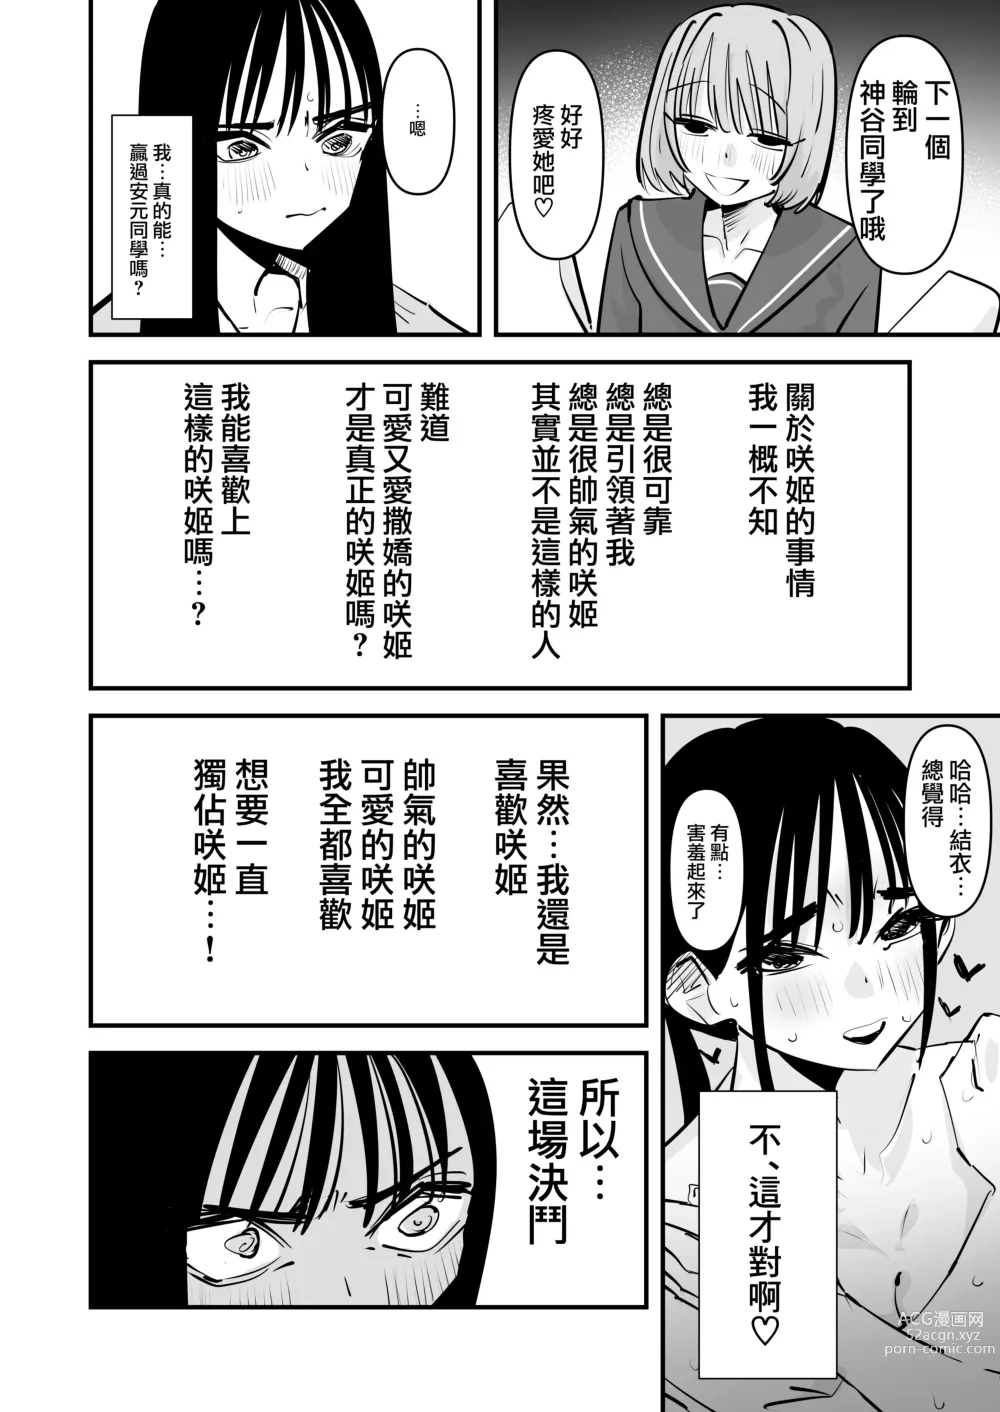 Page 24 of doujinshi 女子樂隊·淫亂百合做愛——吉他手和貝斯手，誰的手技更甚一籌？